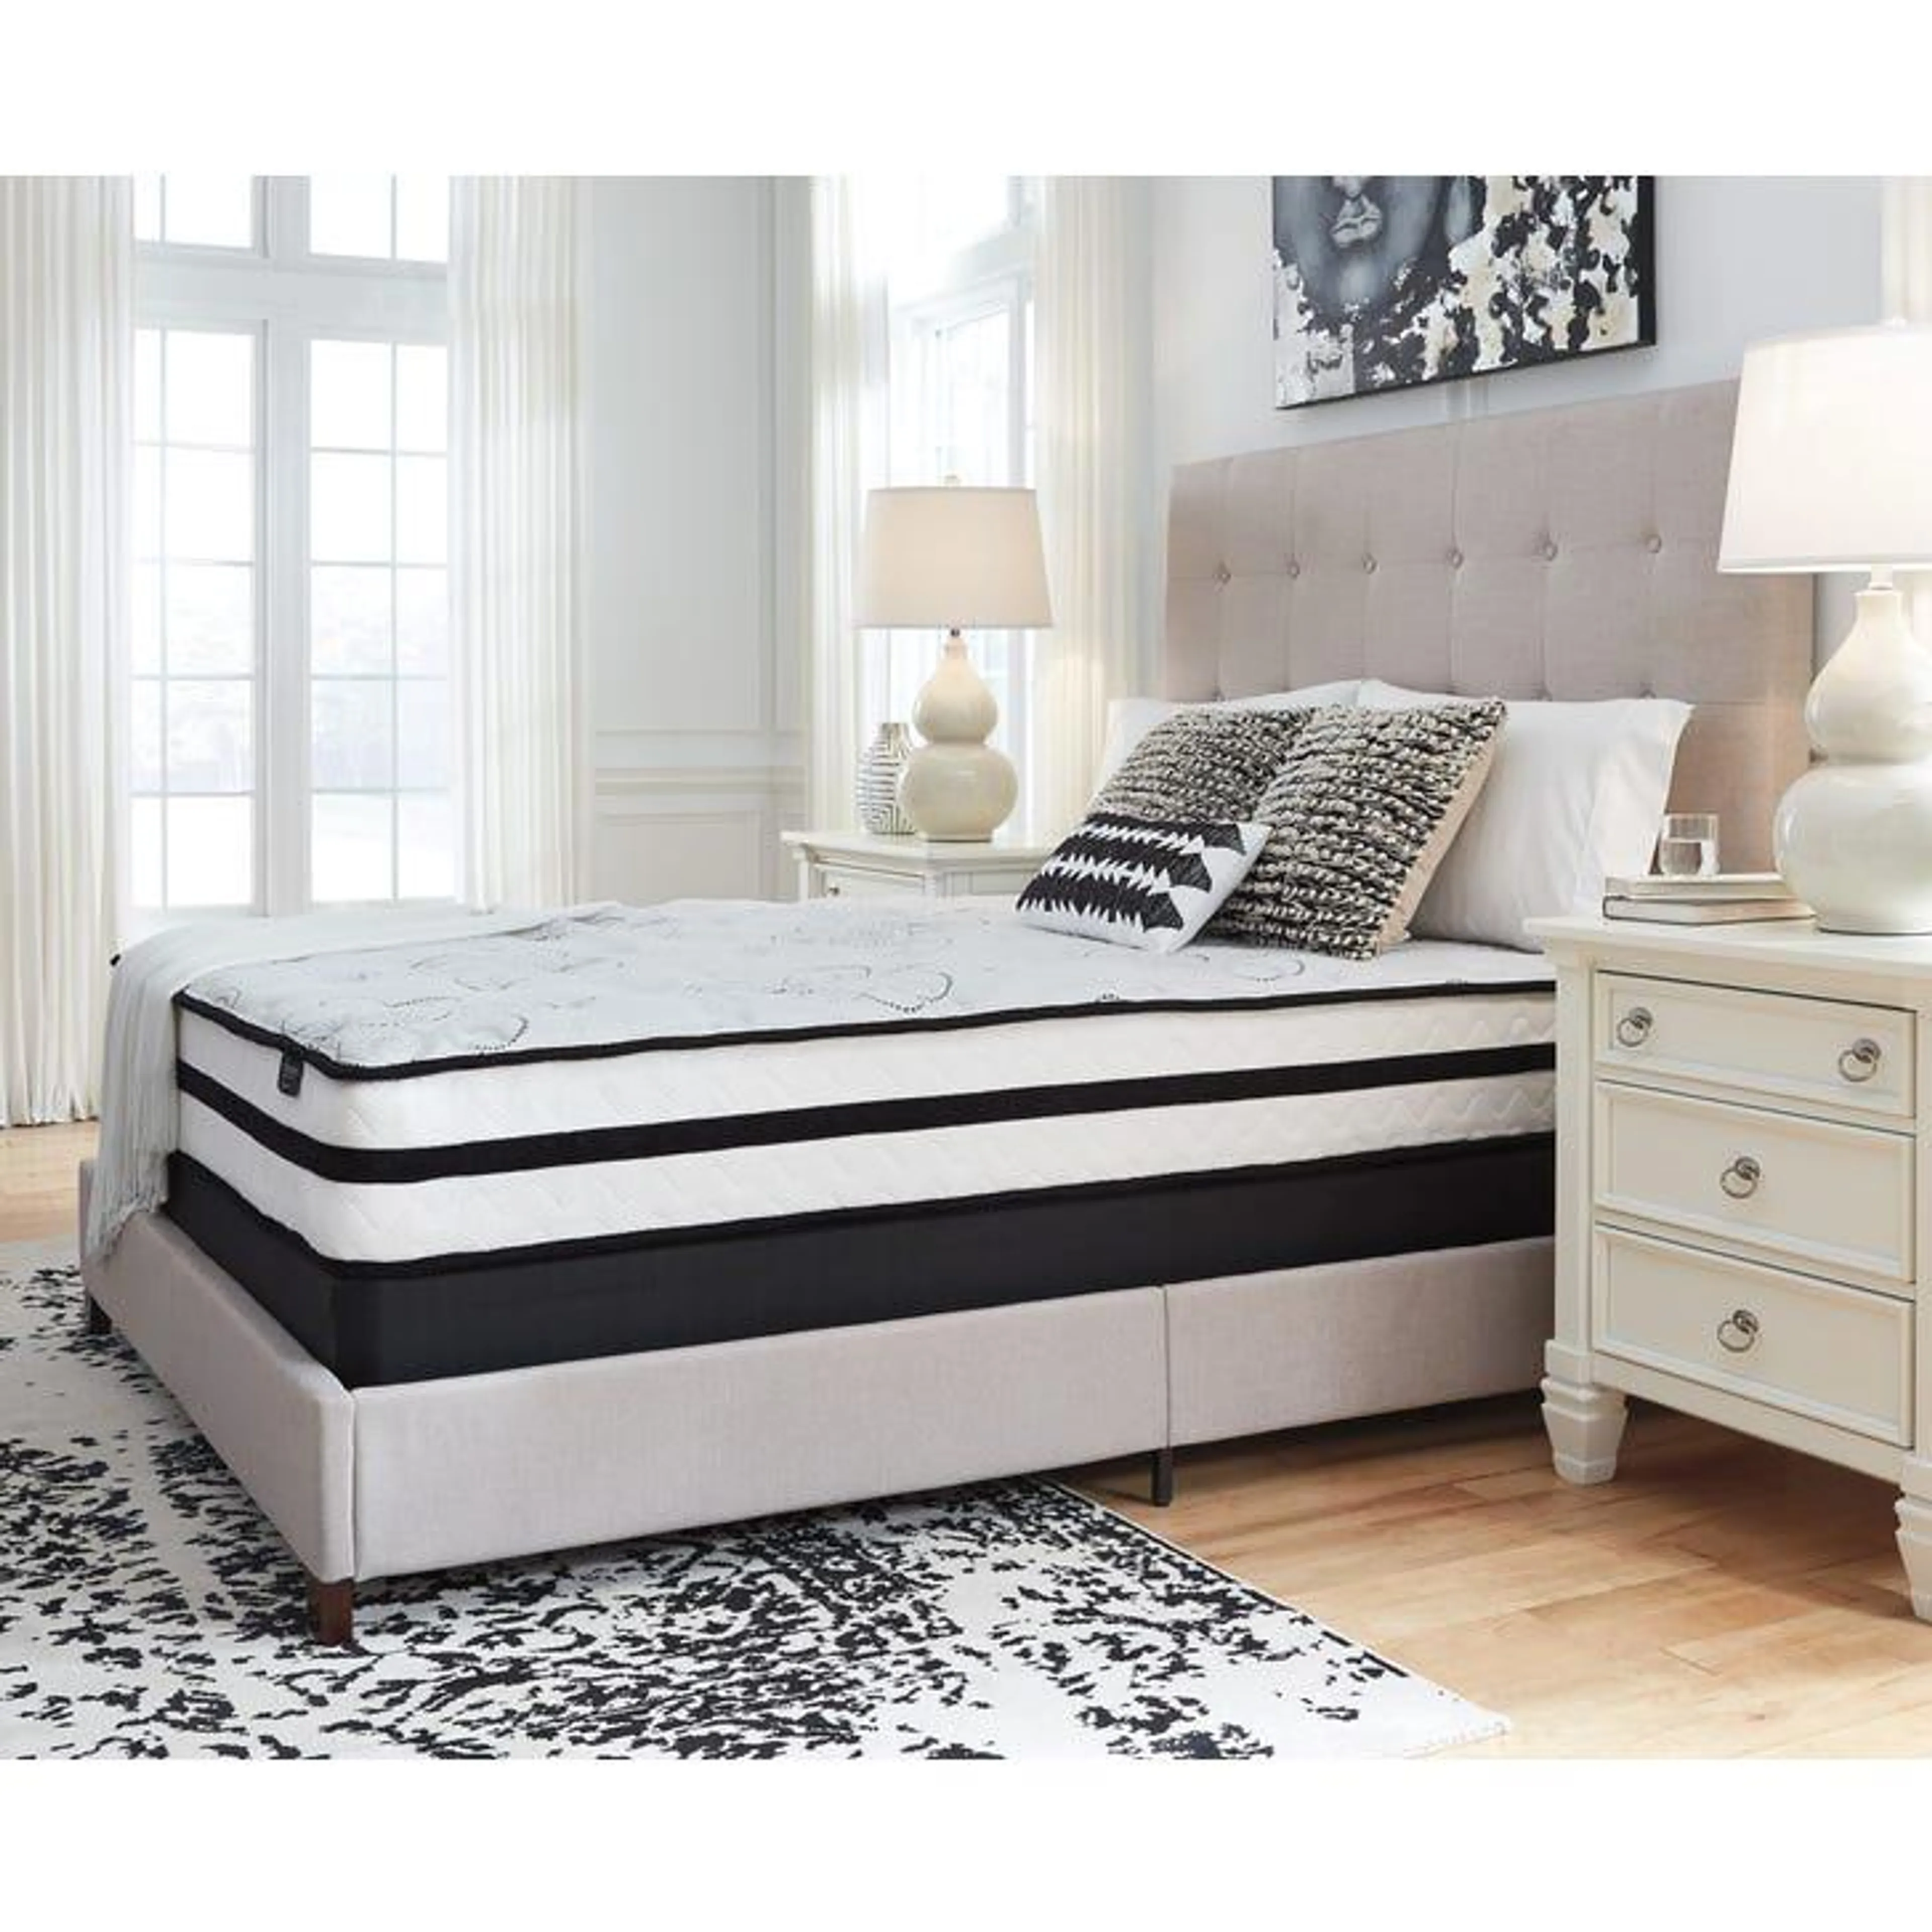 Queen Ashley Chime 10 Inch Hybrid Cushion Firm Bed in a Box Mattress